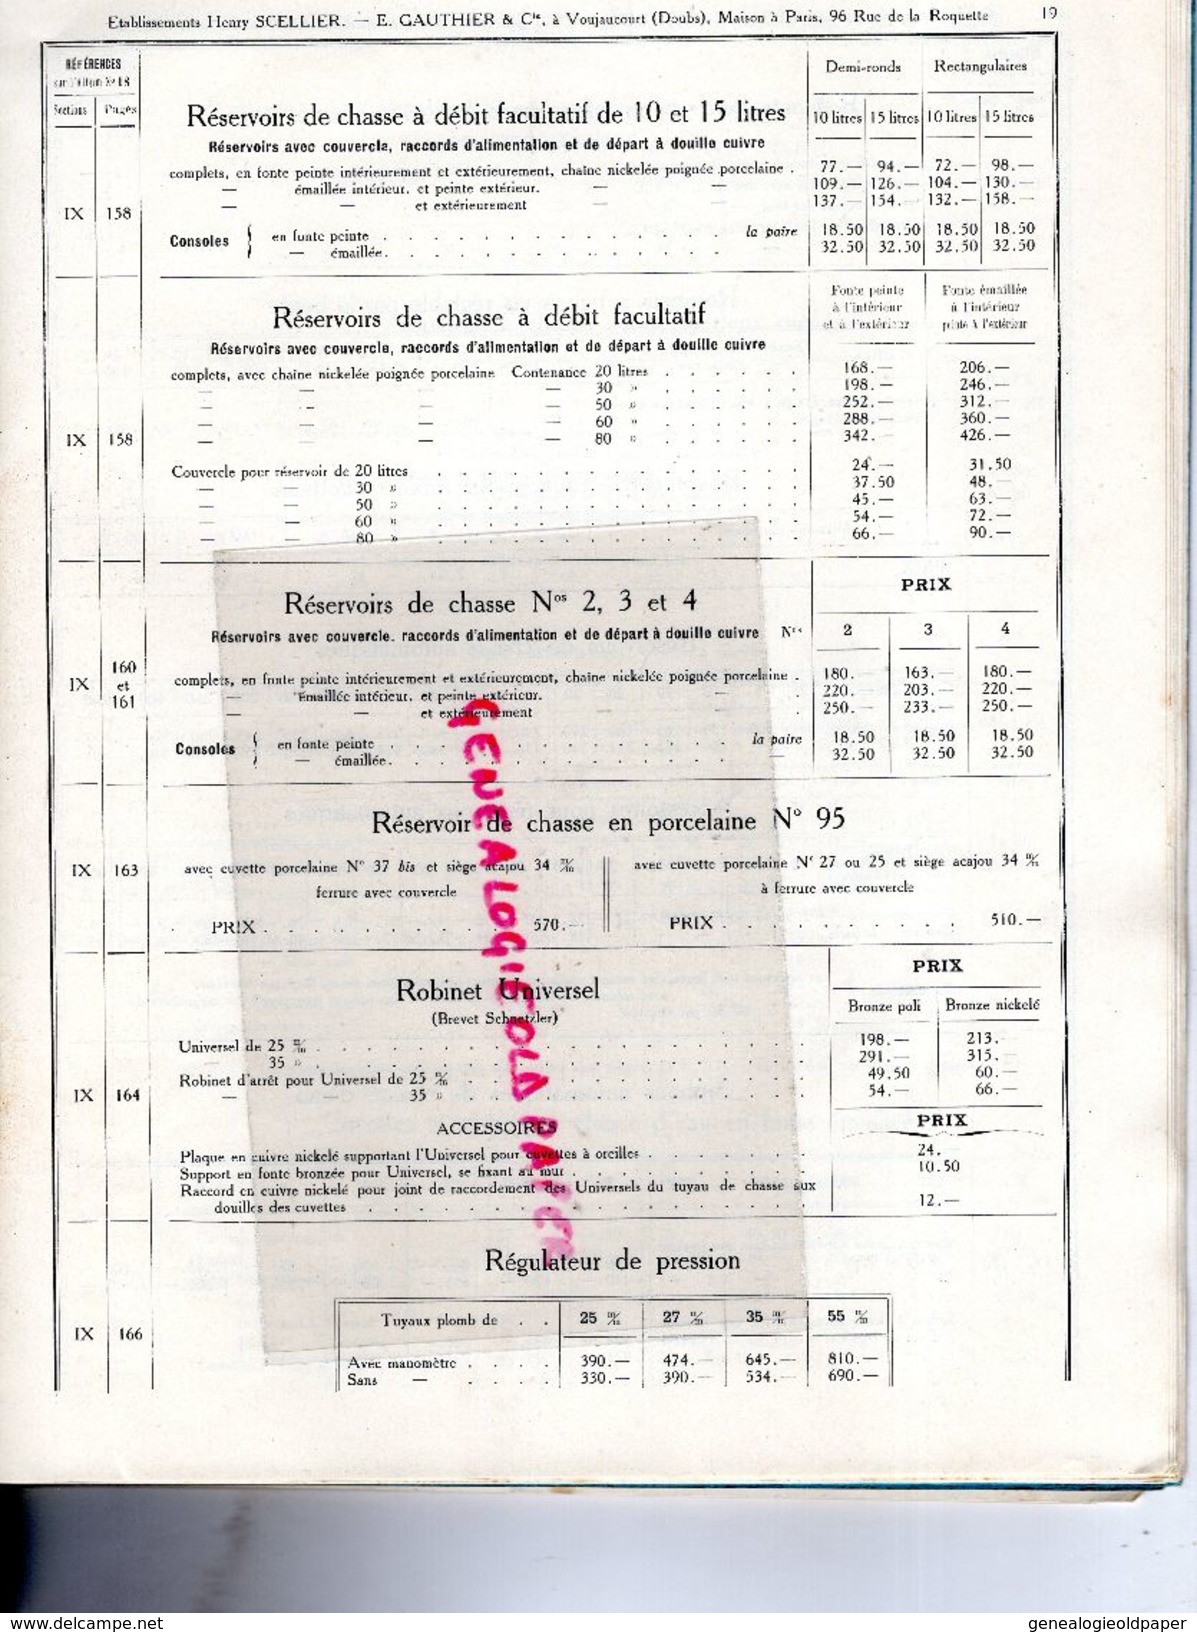 25- VOUJAUCOURT-MONTBELIARD- RARE CATALOGUE ETS. HENRY SCELLIER & E. GAUTHIER-FONDERIES EMAILLERIES-EMAIL-FONDERIE-1919 - Artesanos